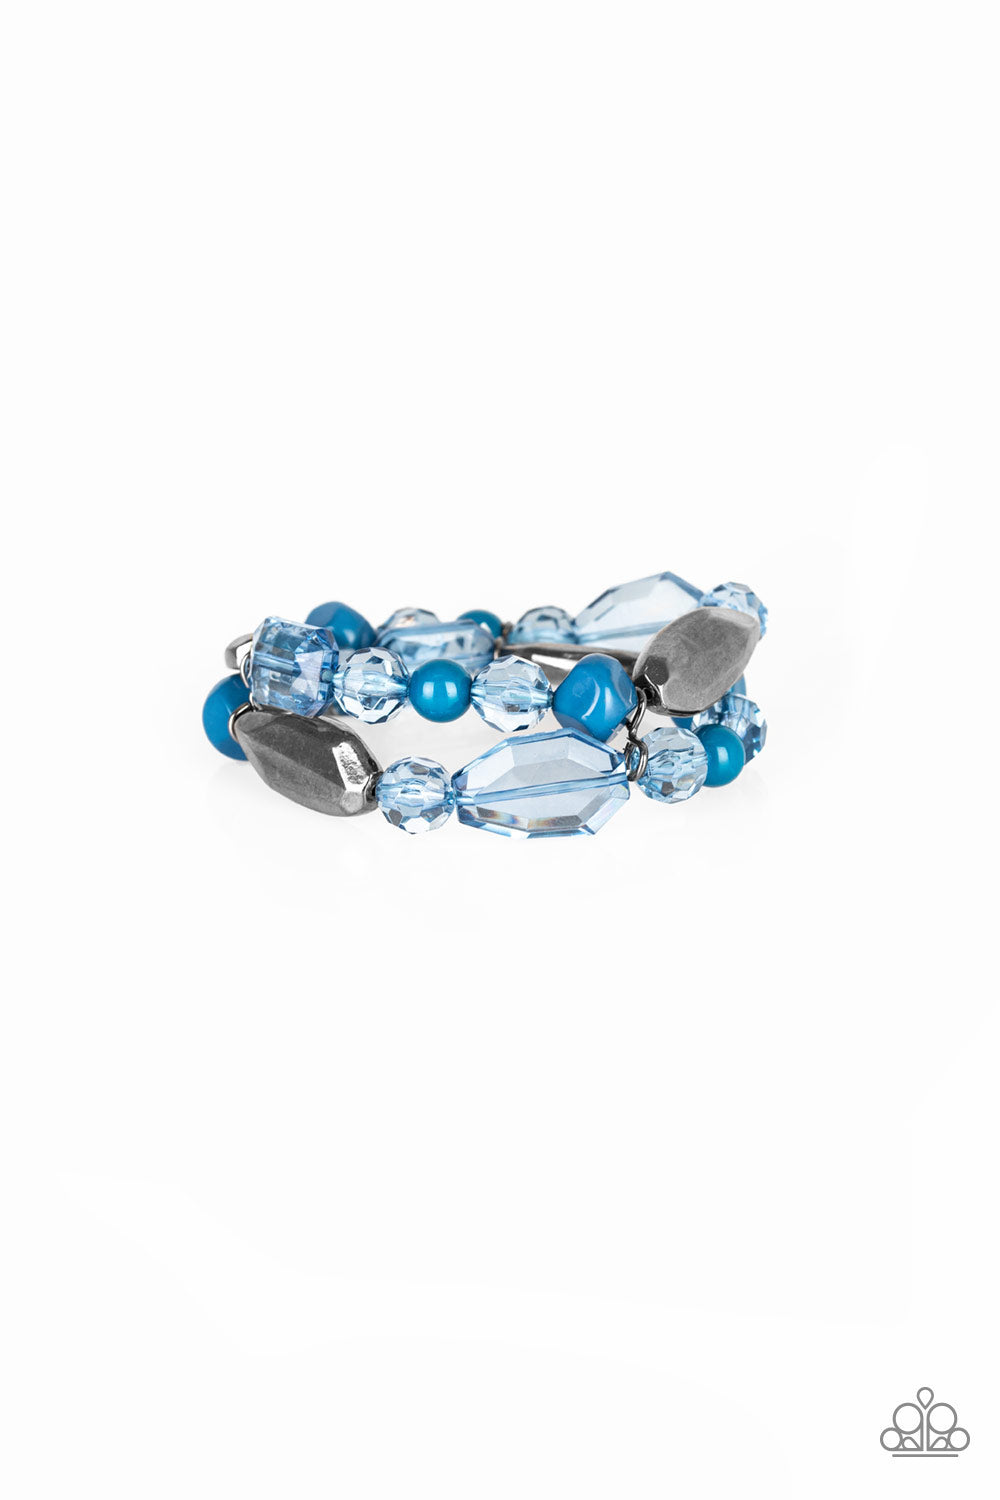 Paparazzi Accessories - Rockin Rock Candy #B466 - Blue Bracelet